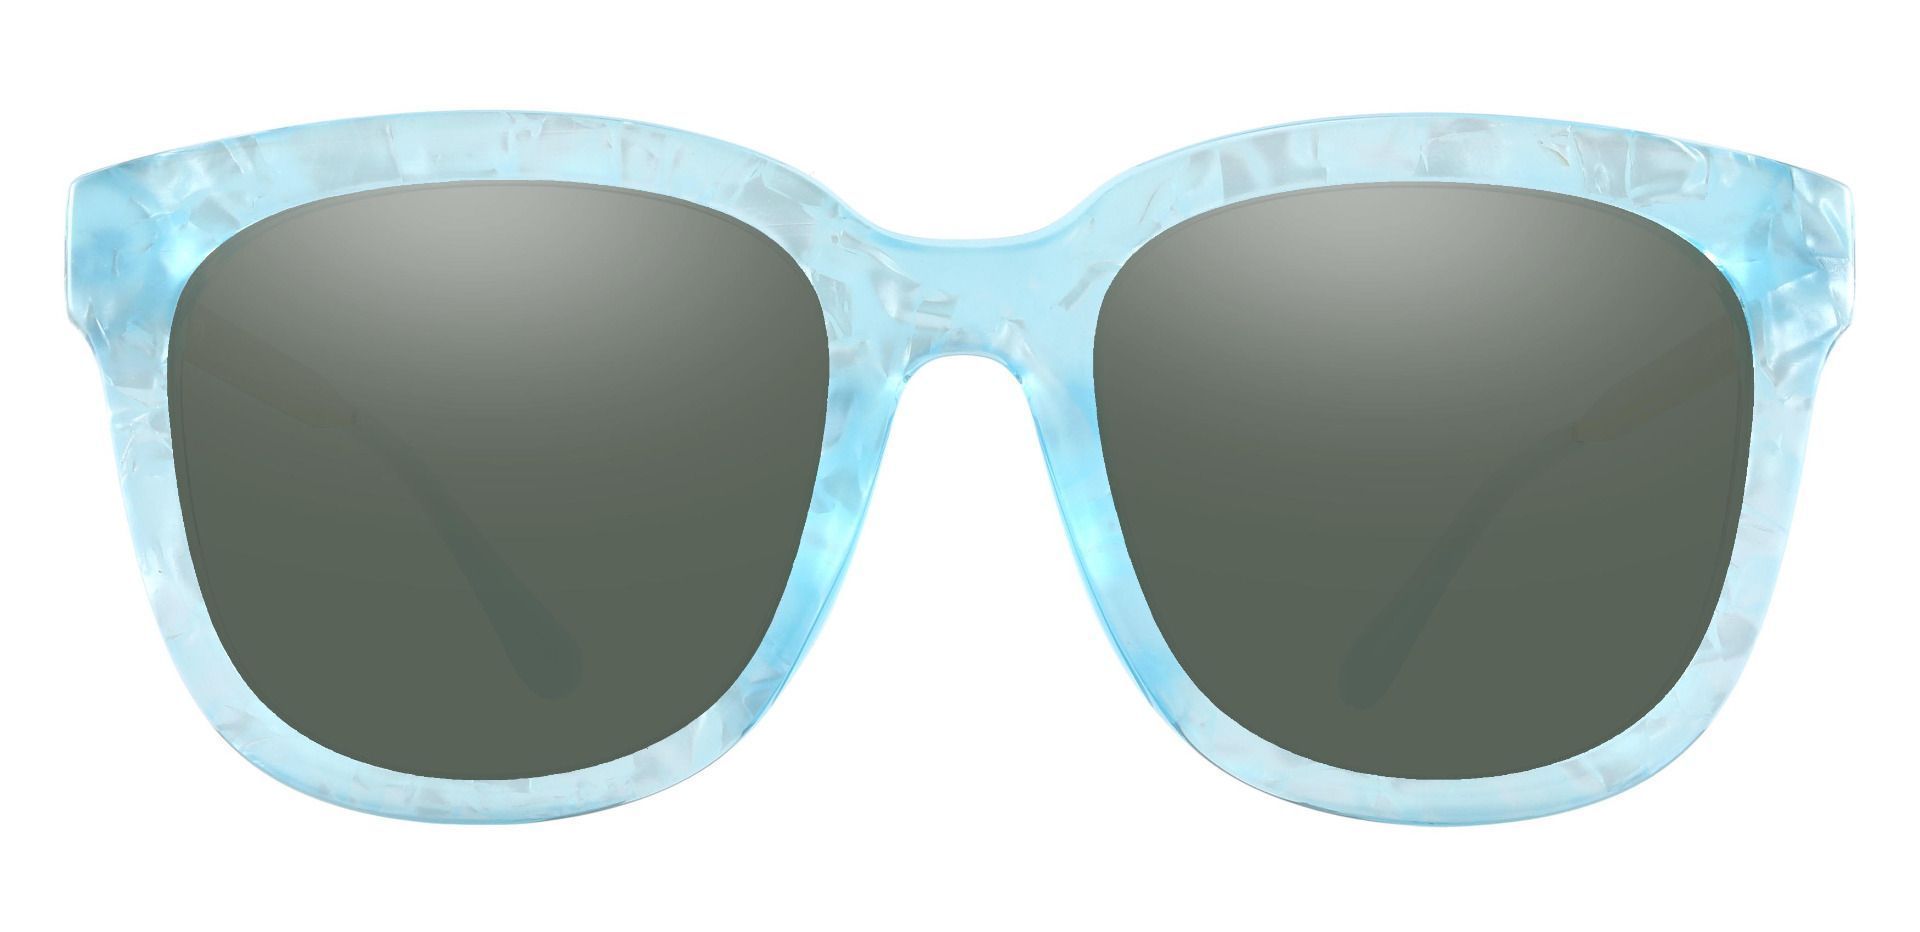 Aberdeen Square Prescription Sunglasses - Blue Frame With Green Lenses